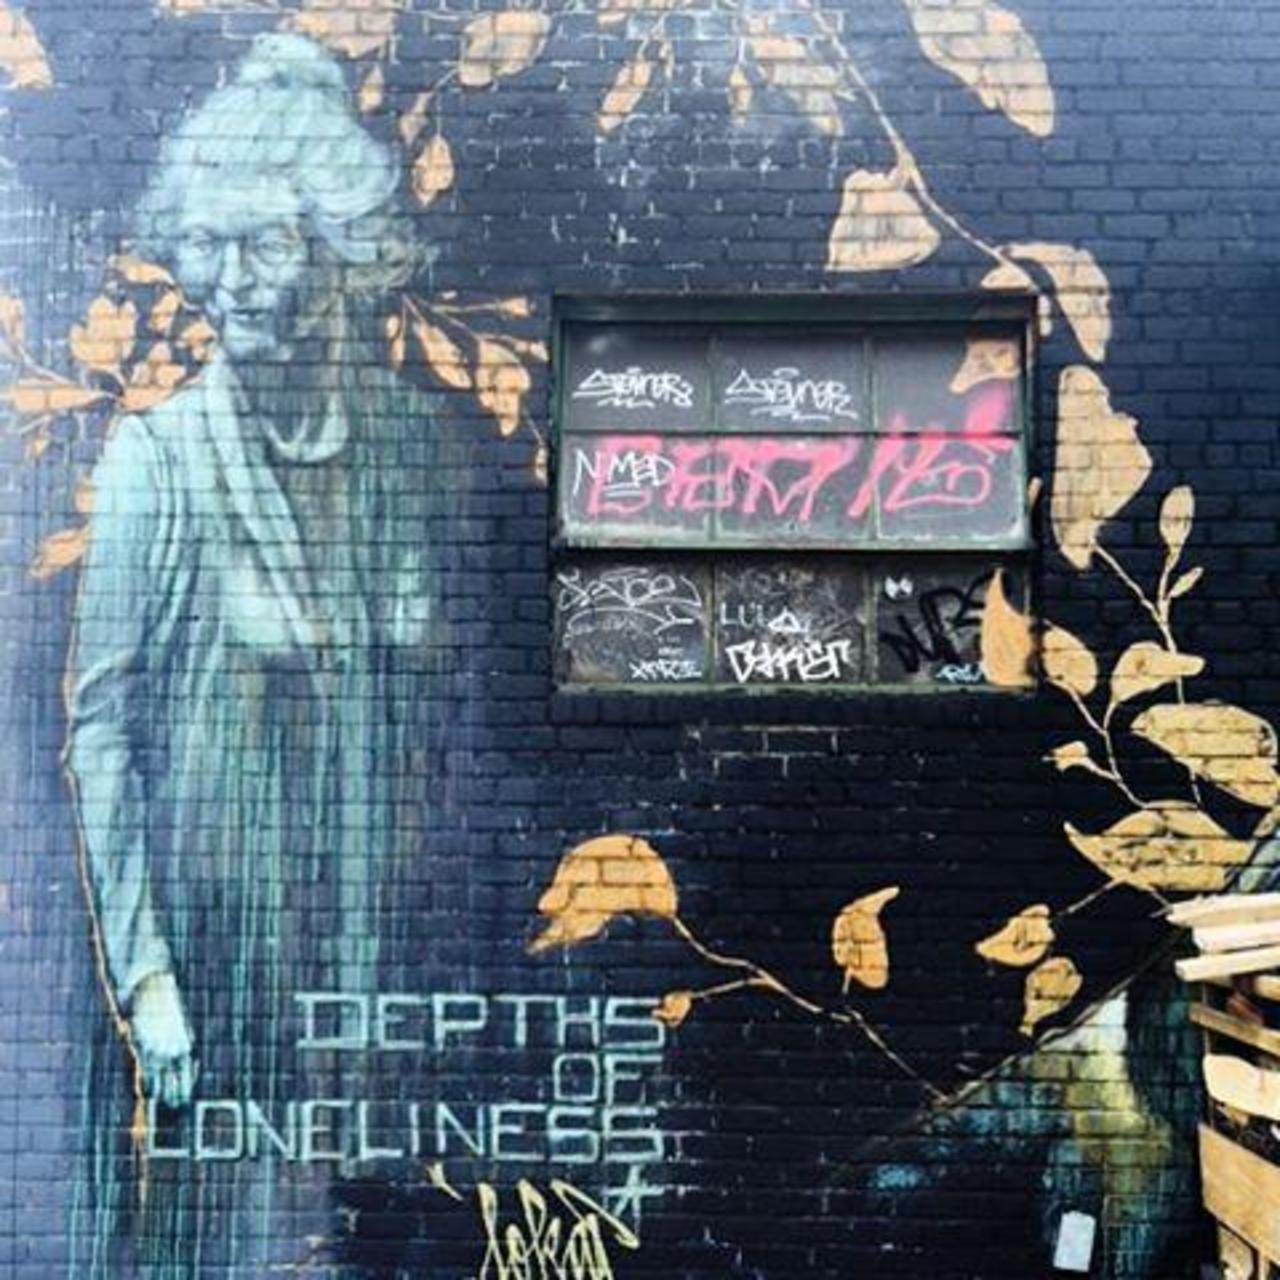 Depths #streetart #mural #painting #walls #graffiti #brooklyn #newyorkcity #nyc #nycstreetart #streetartnyc by _m_9… http://t.co/G9apbk1lfL